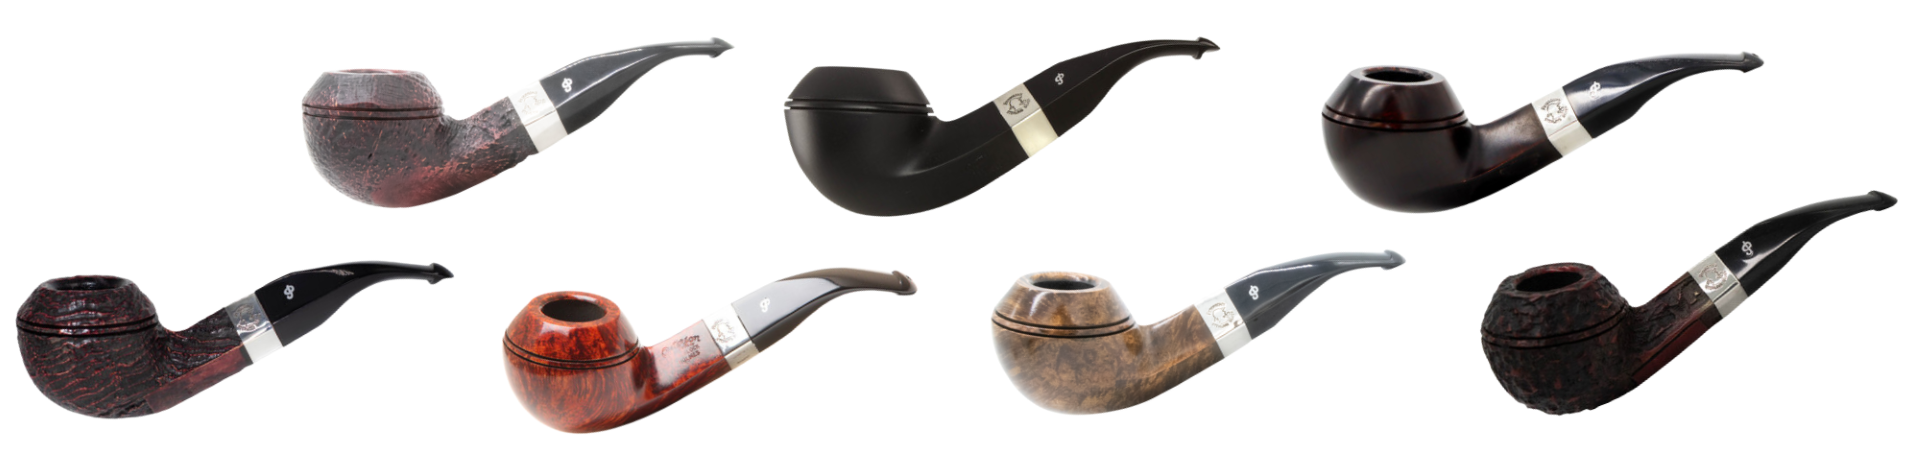 Peterson Sherlock Holmes Squire Tobacco Pipe